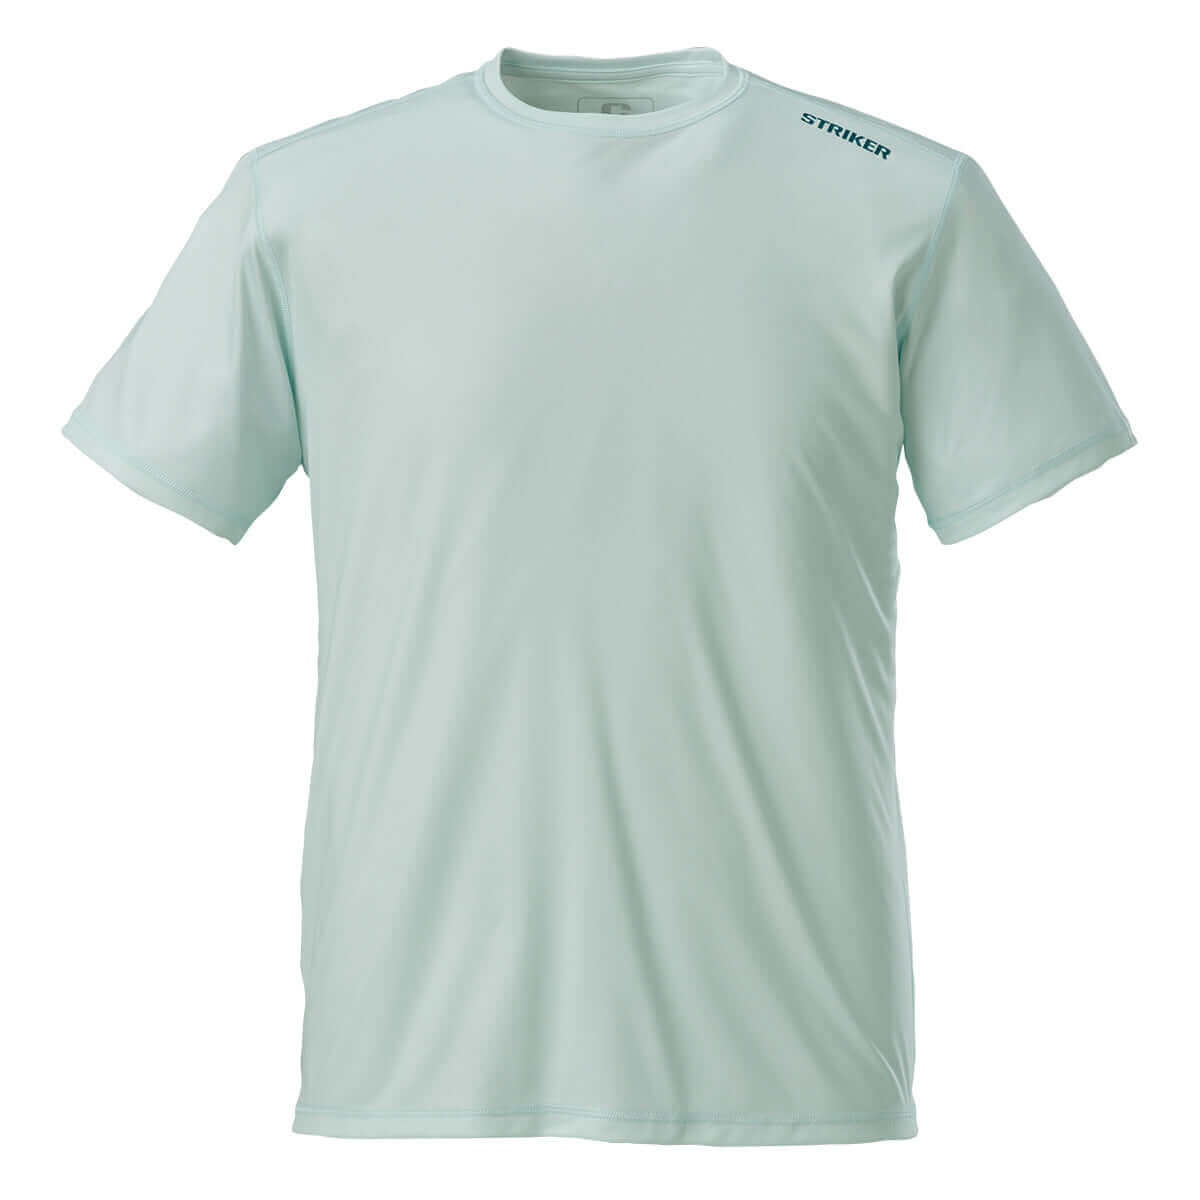 Prime SS Shirt - Light Turquoise